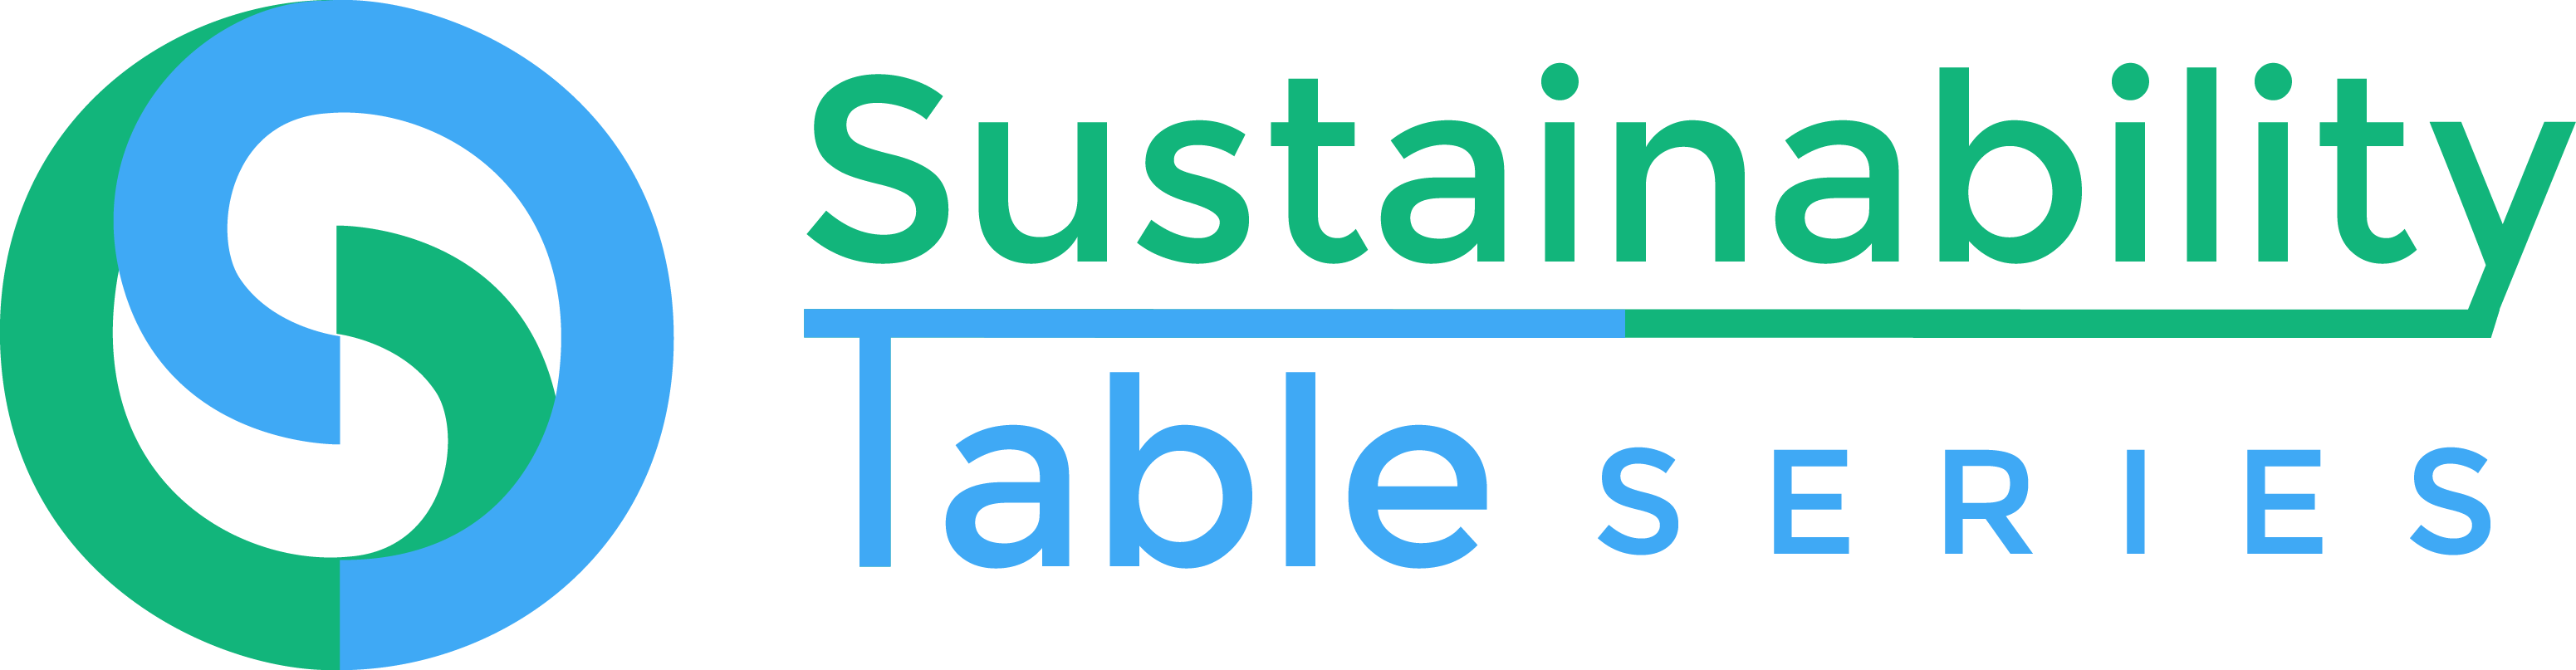 Sustainability Table